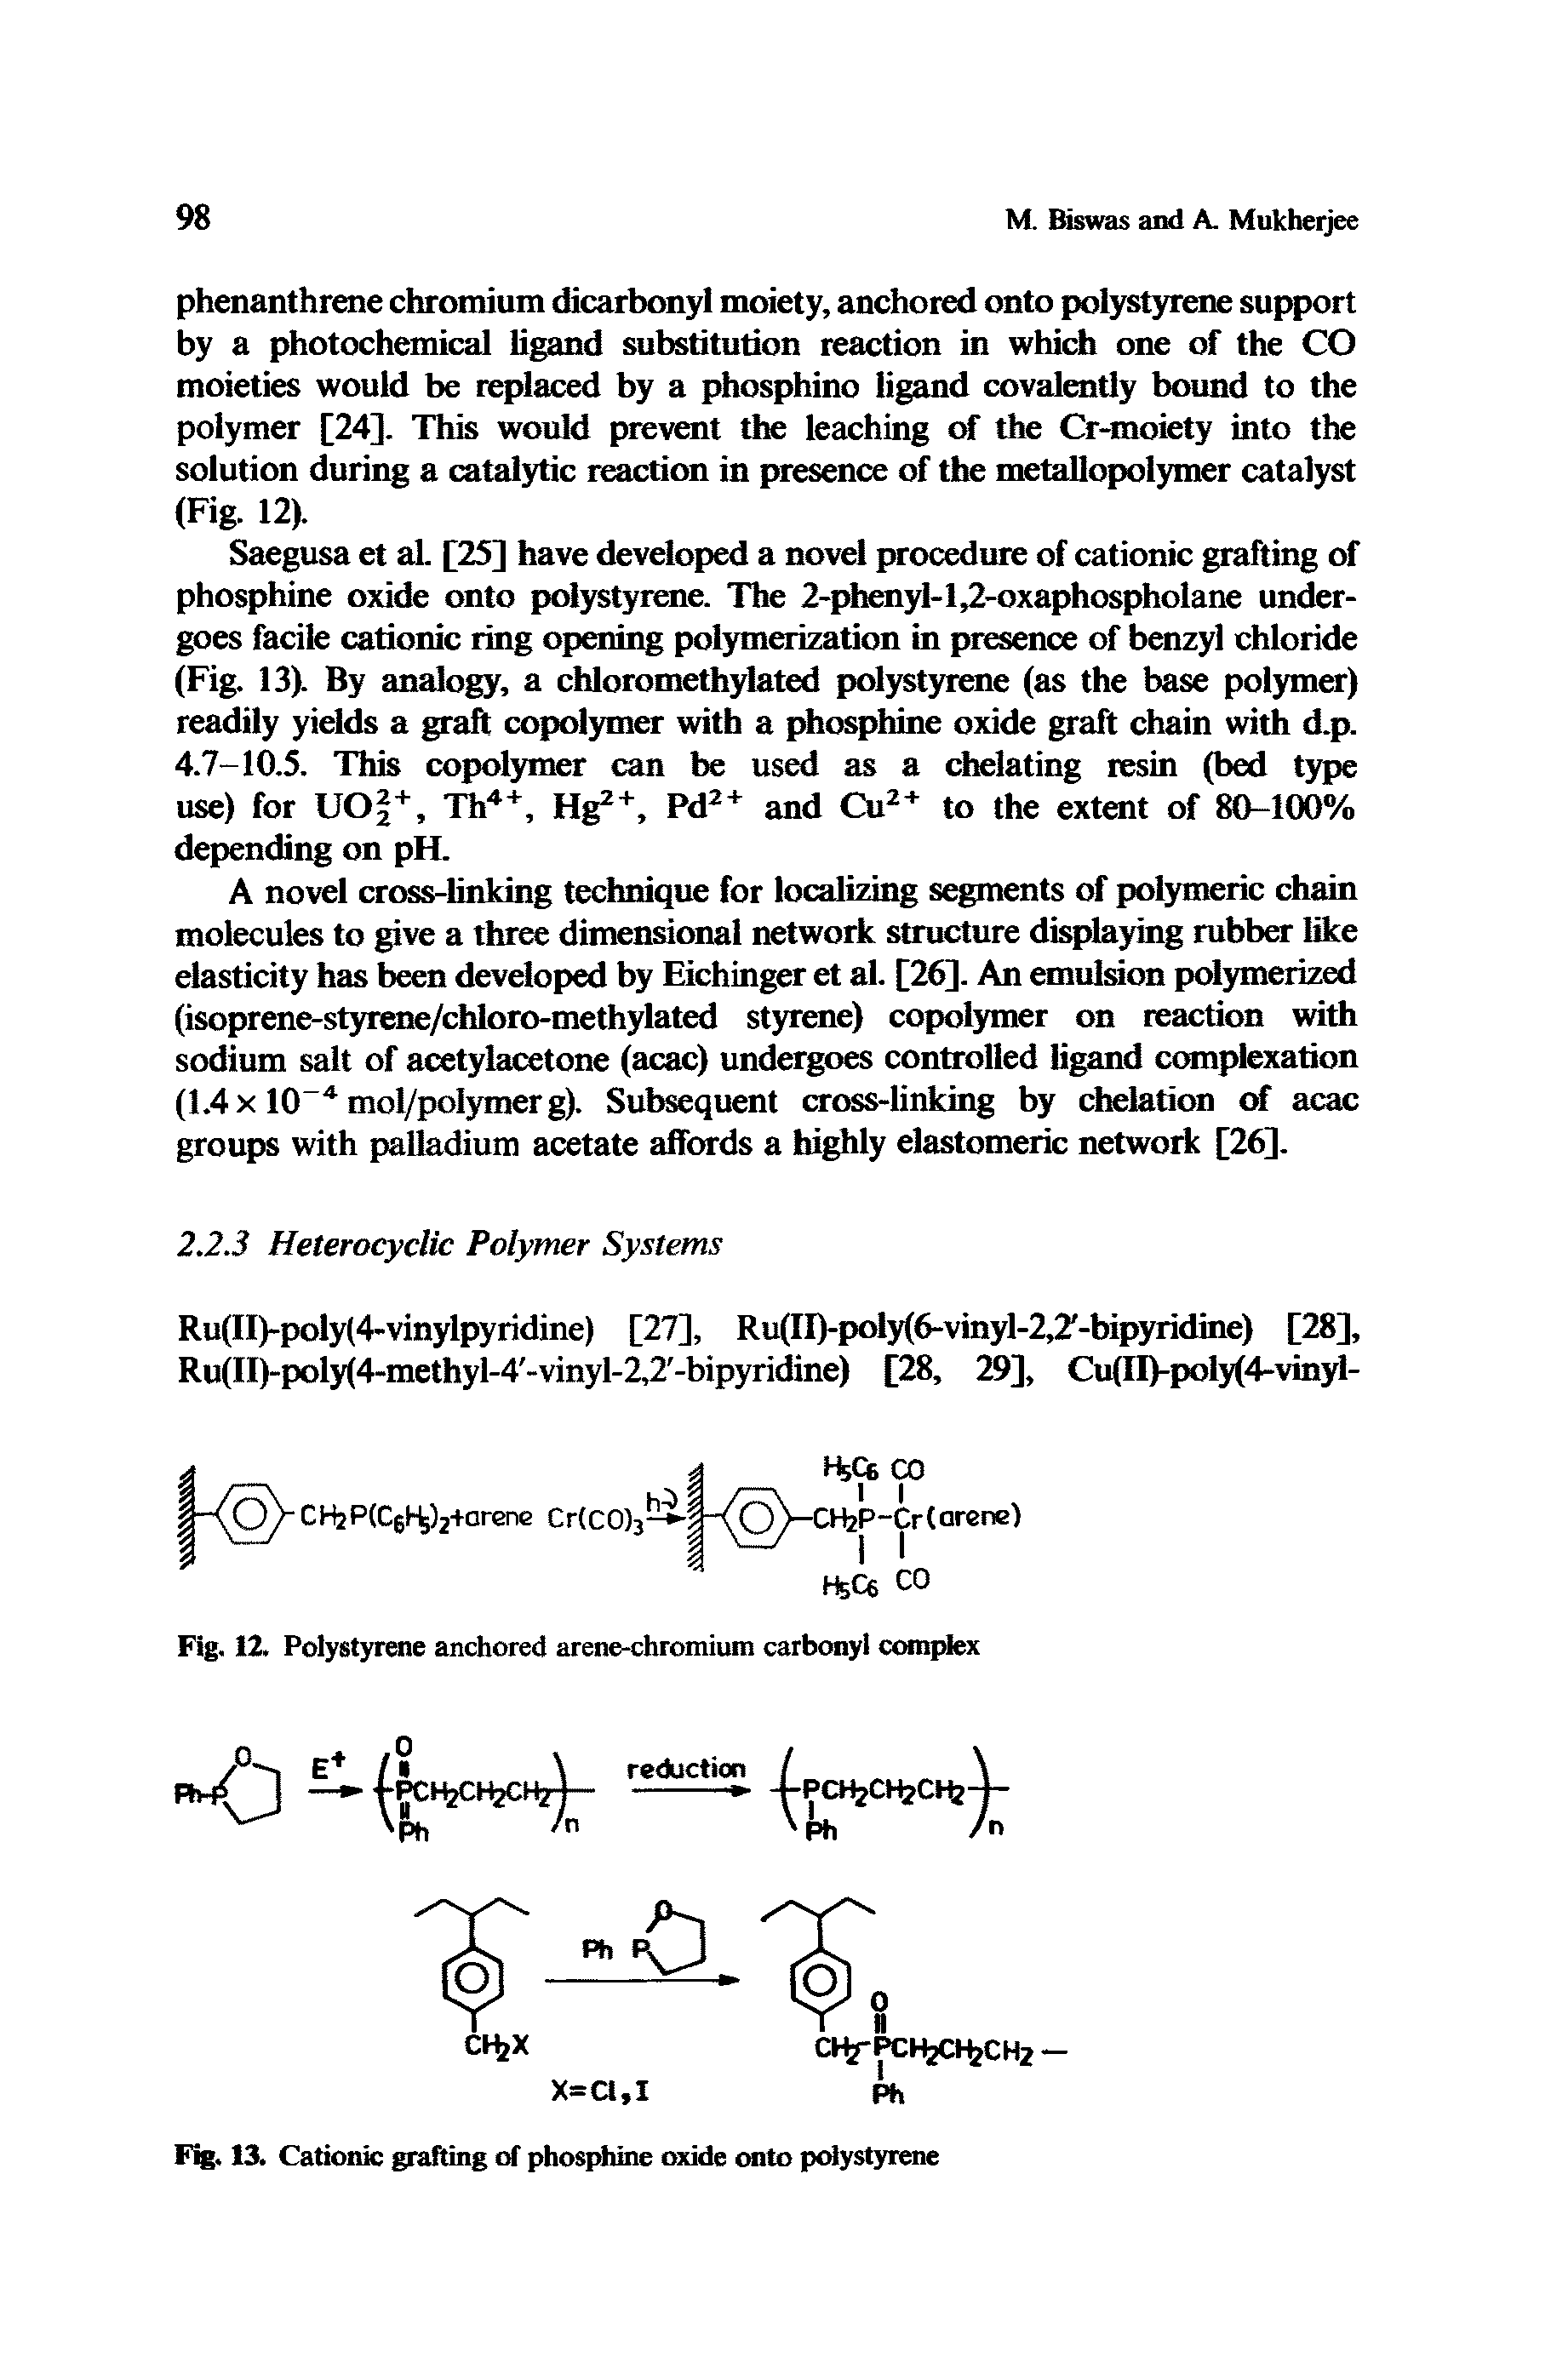 Fig. 12. Polystyrene anchored arene-chromium carbonyl complex...